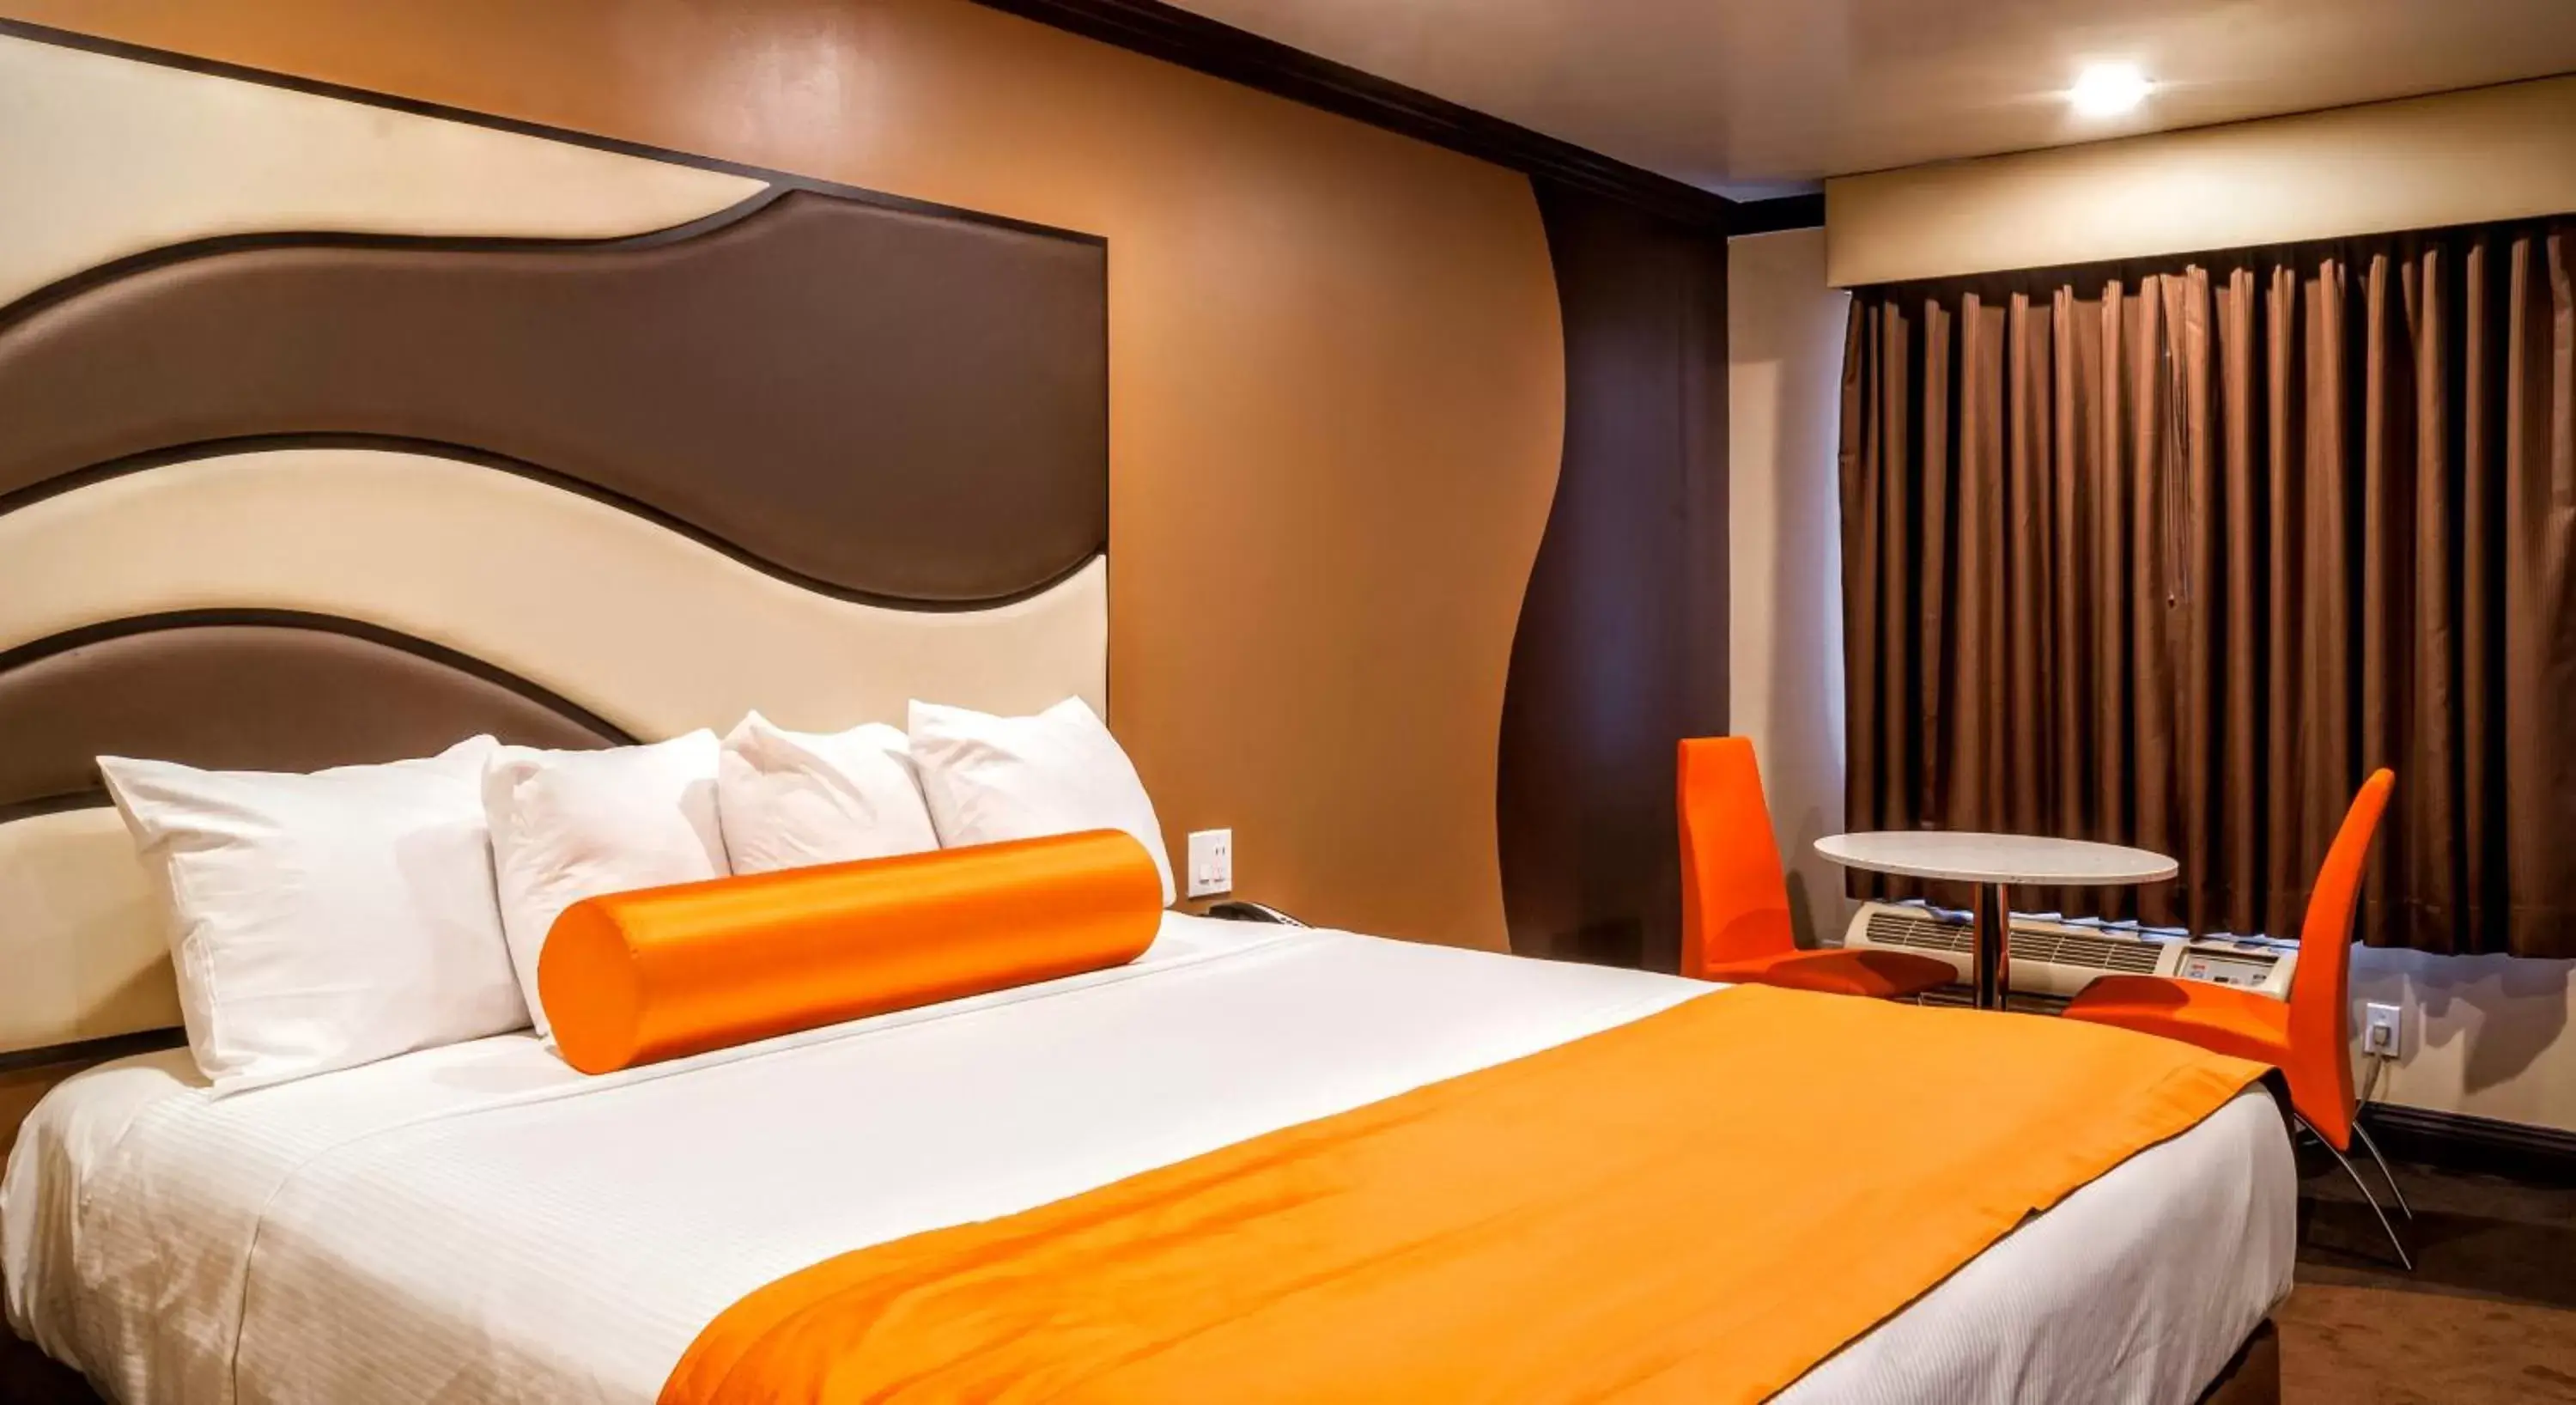 Bed, Room Photo in Redondo Pier Inn